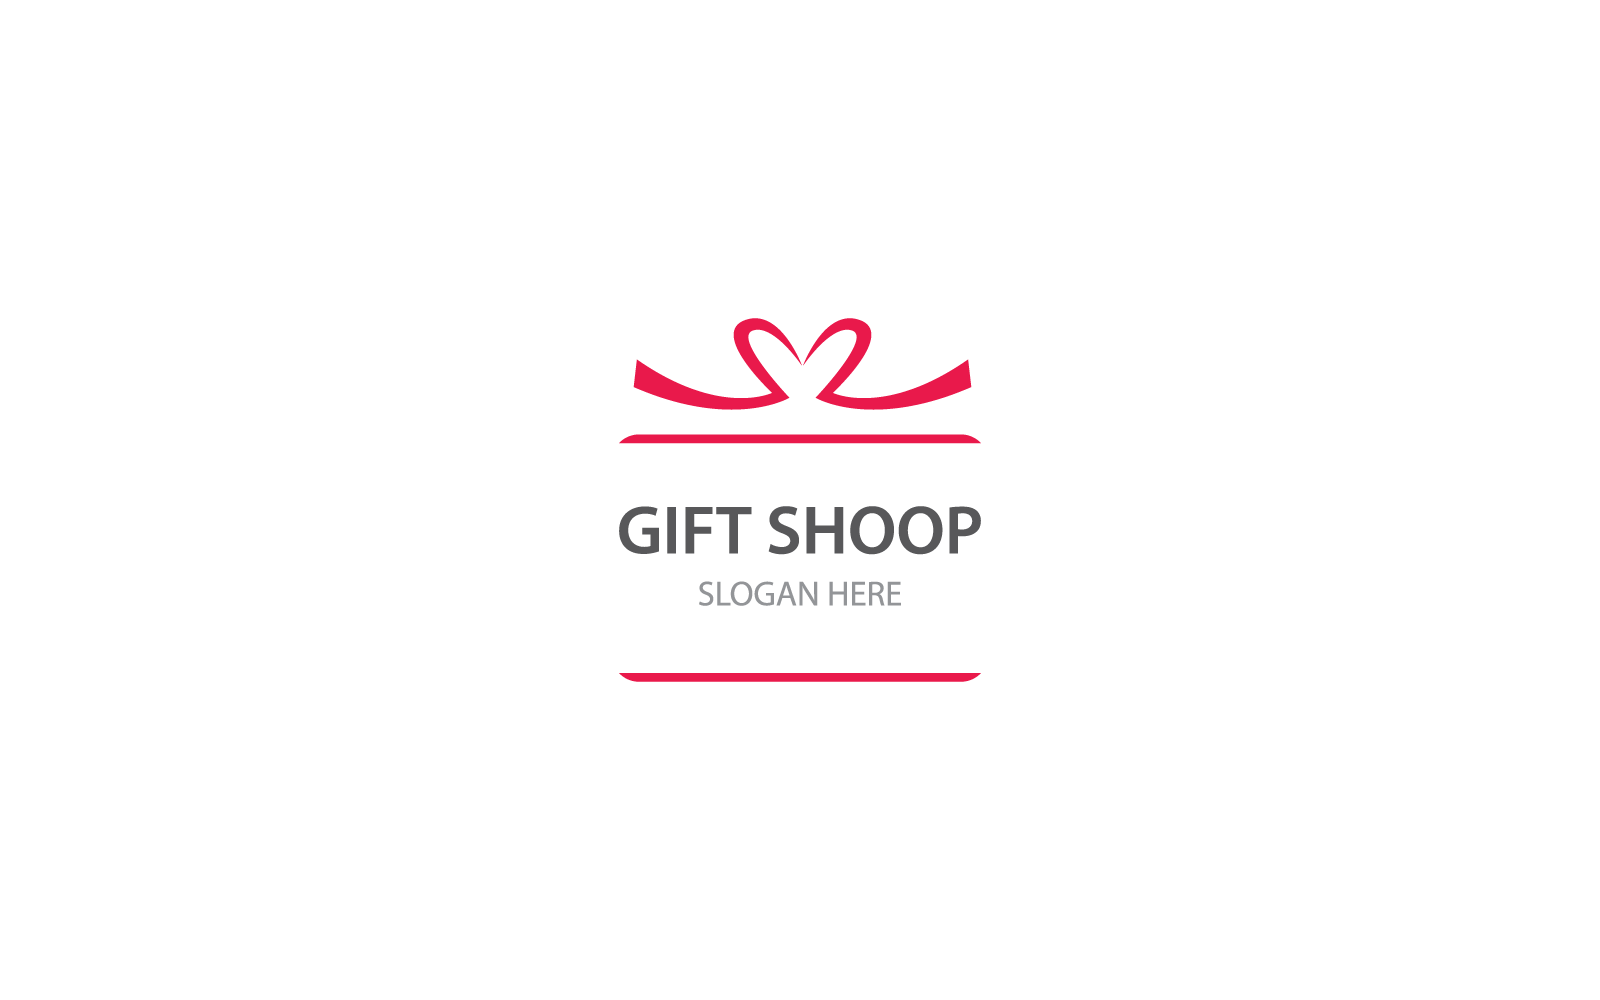 Gift Box, gift shop illustration logo icon design